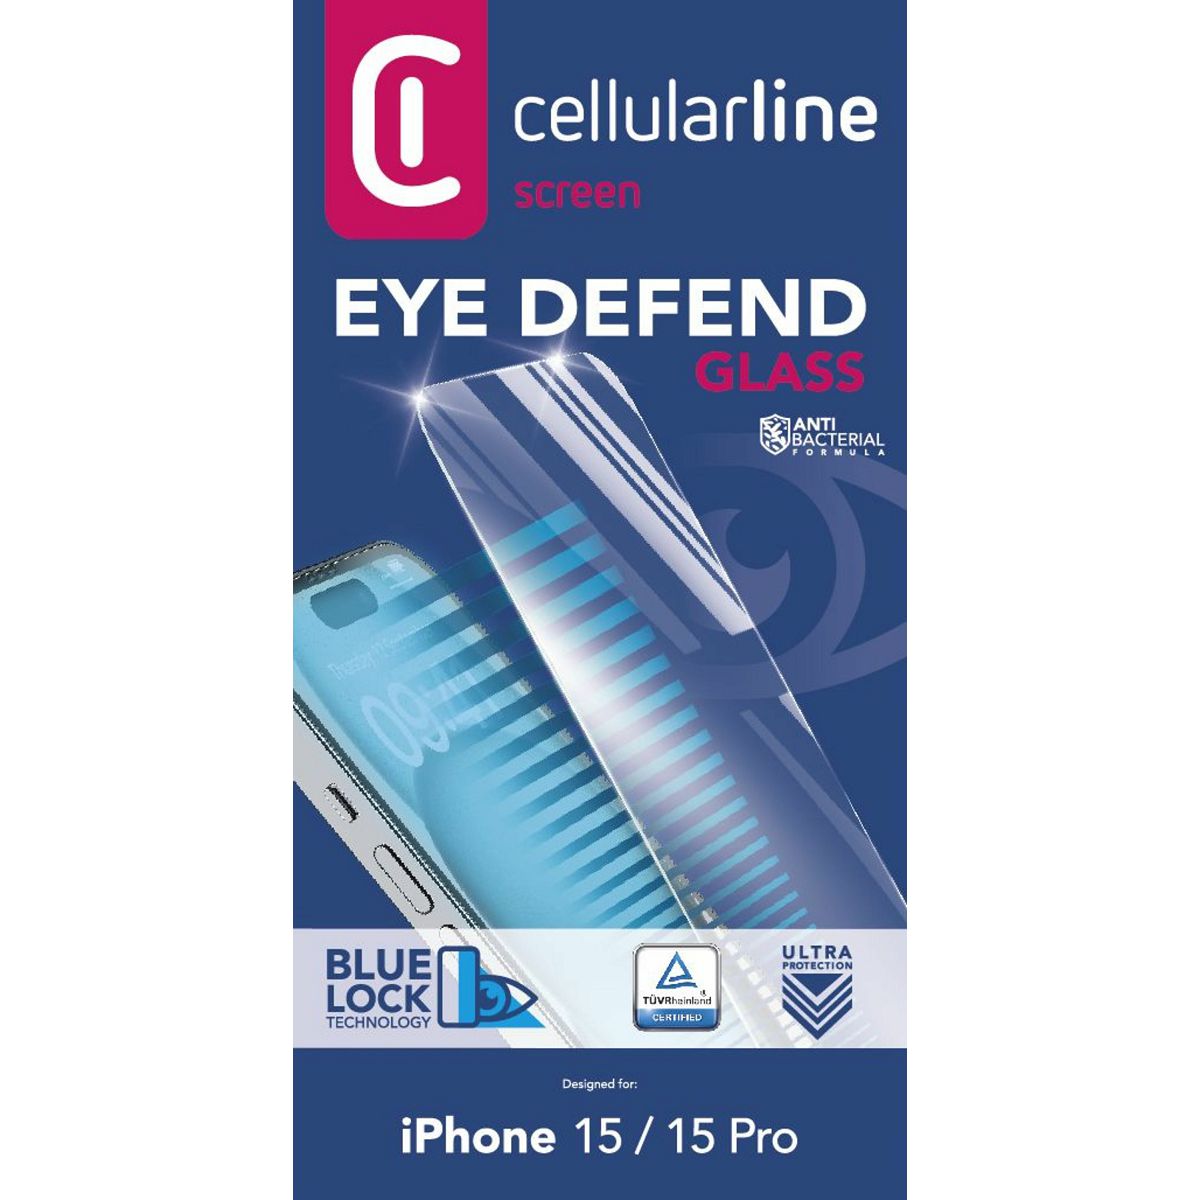 cellularline-zascitno-steklo-eyedefend-iphone-15-15-pro-65478-102150_8831.jpg